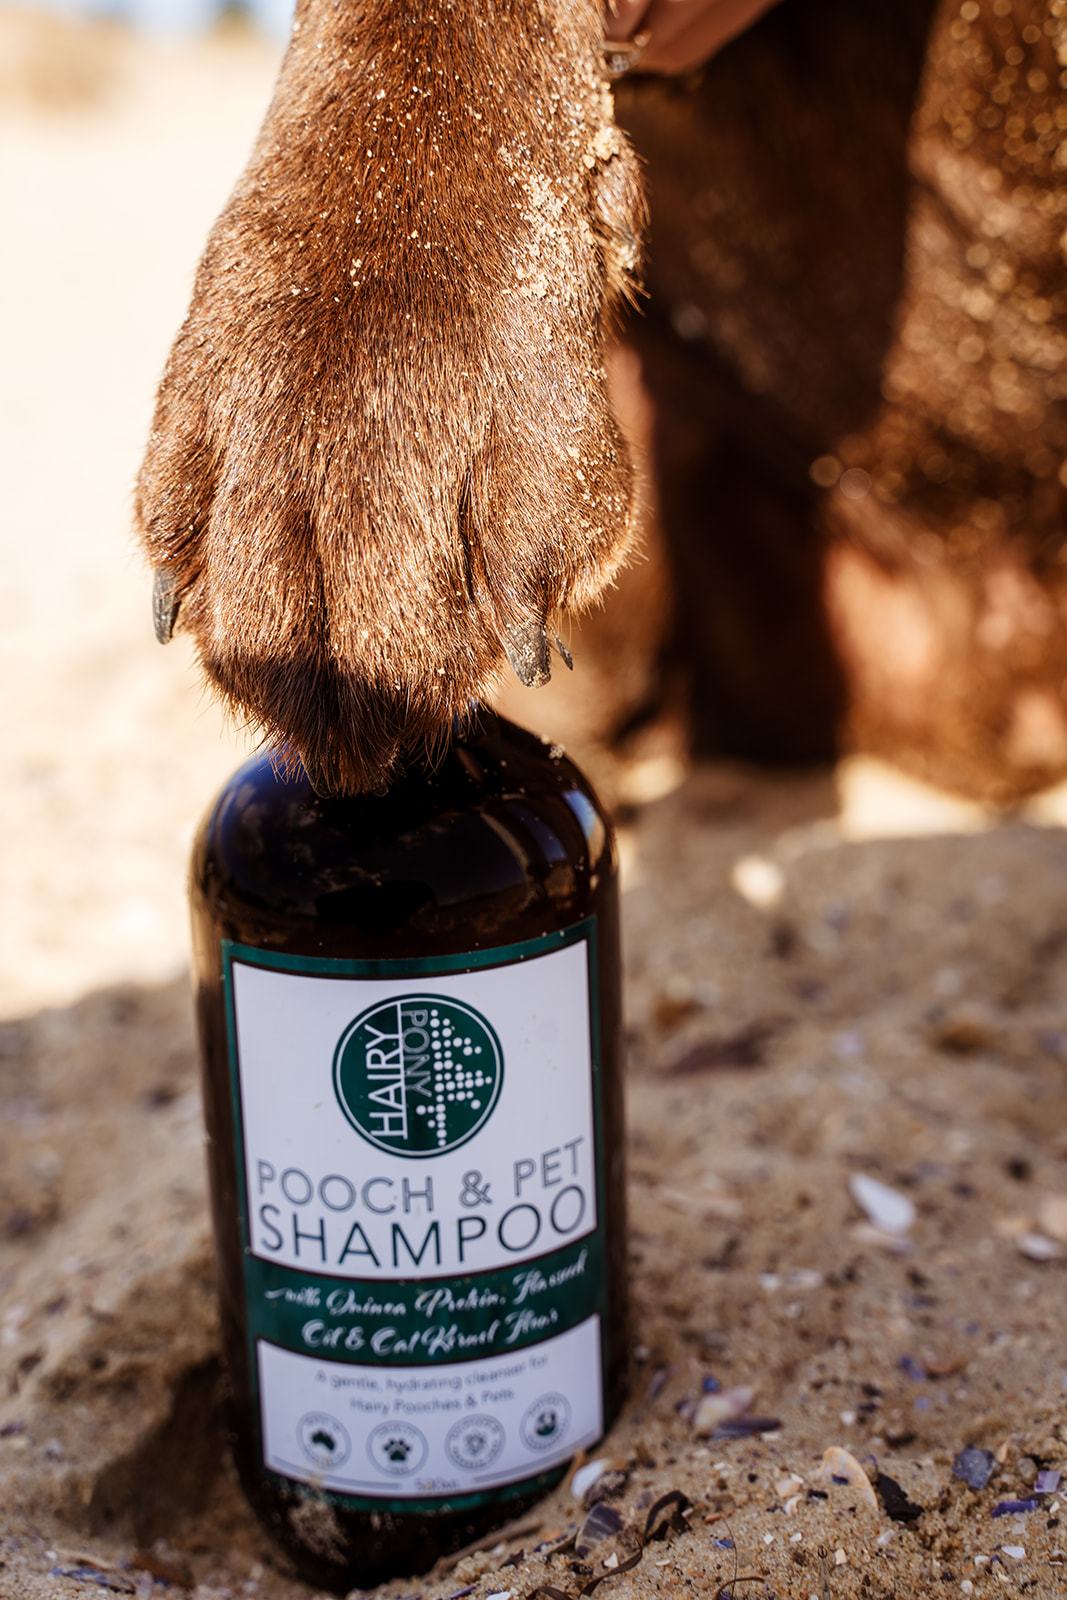 Pooch & Pet Shampoo